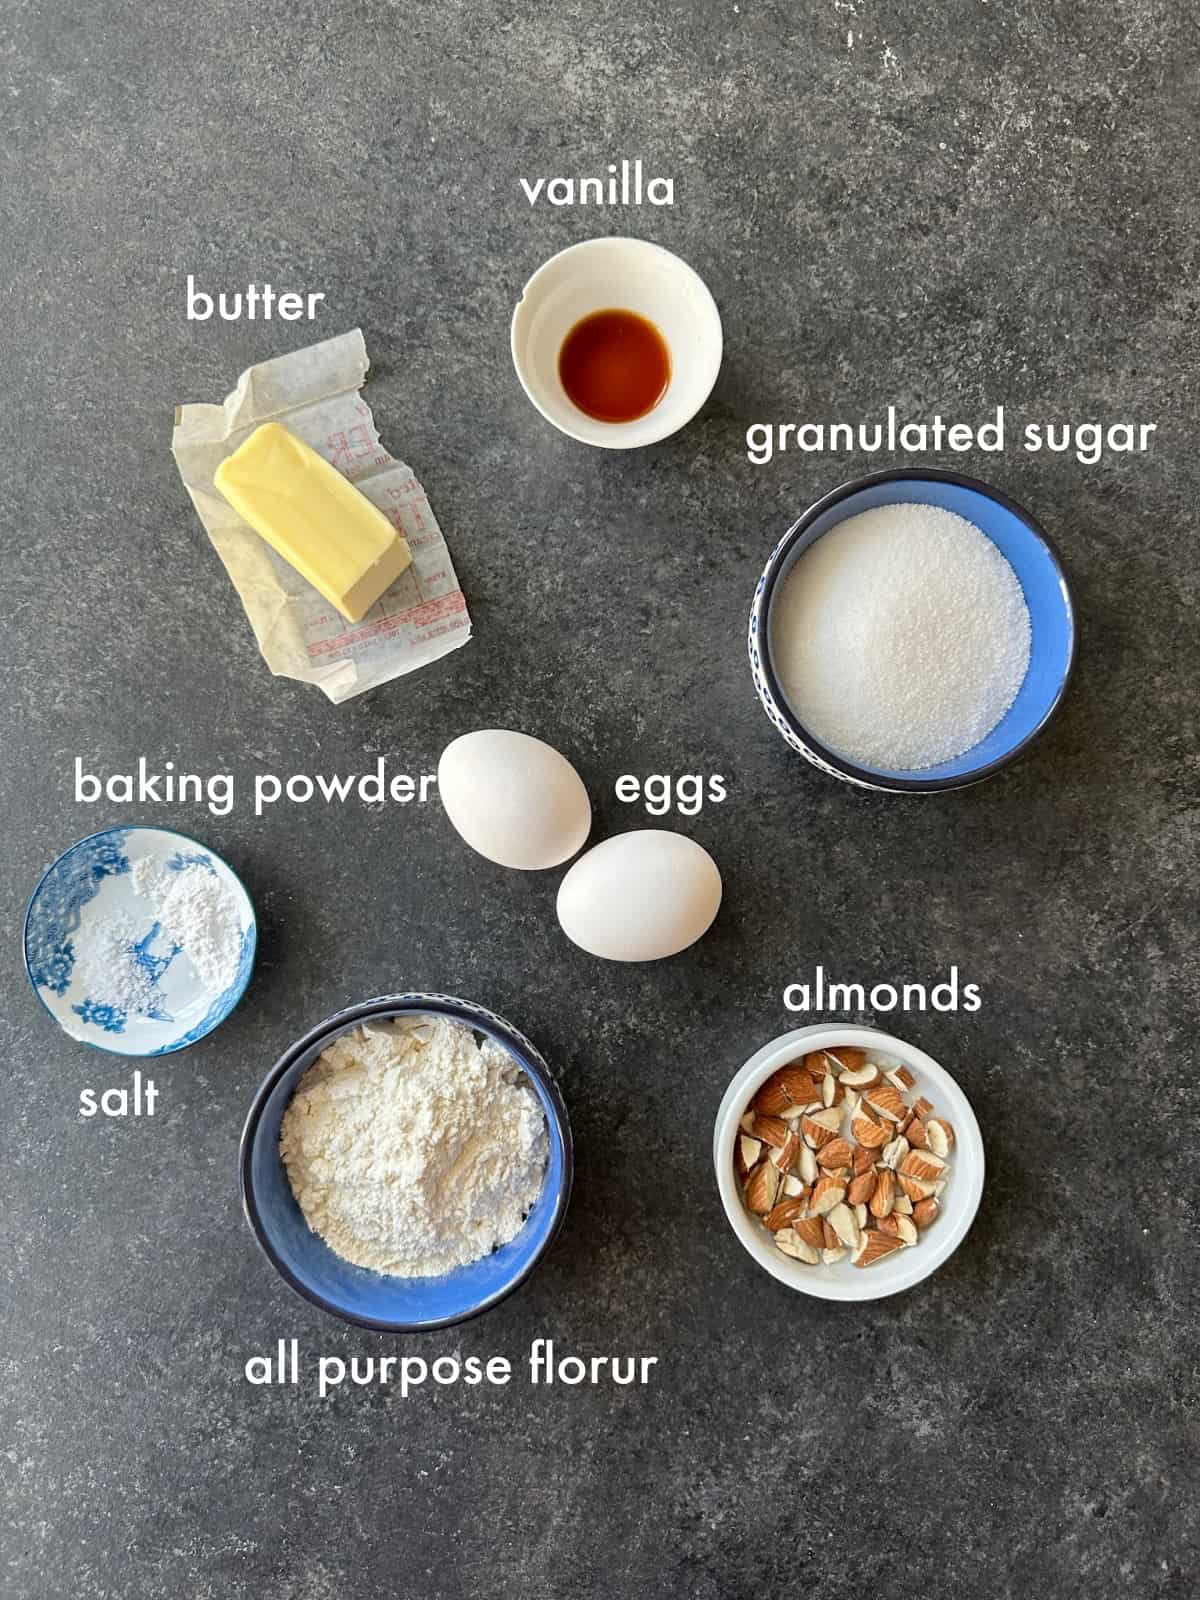 Biscotti ingredients are flour, sugar, salt, baking powder, eggs, butter and almonds. 